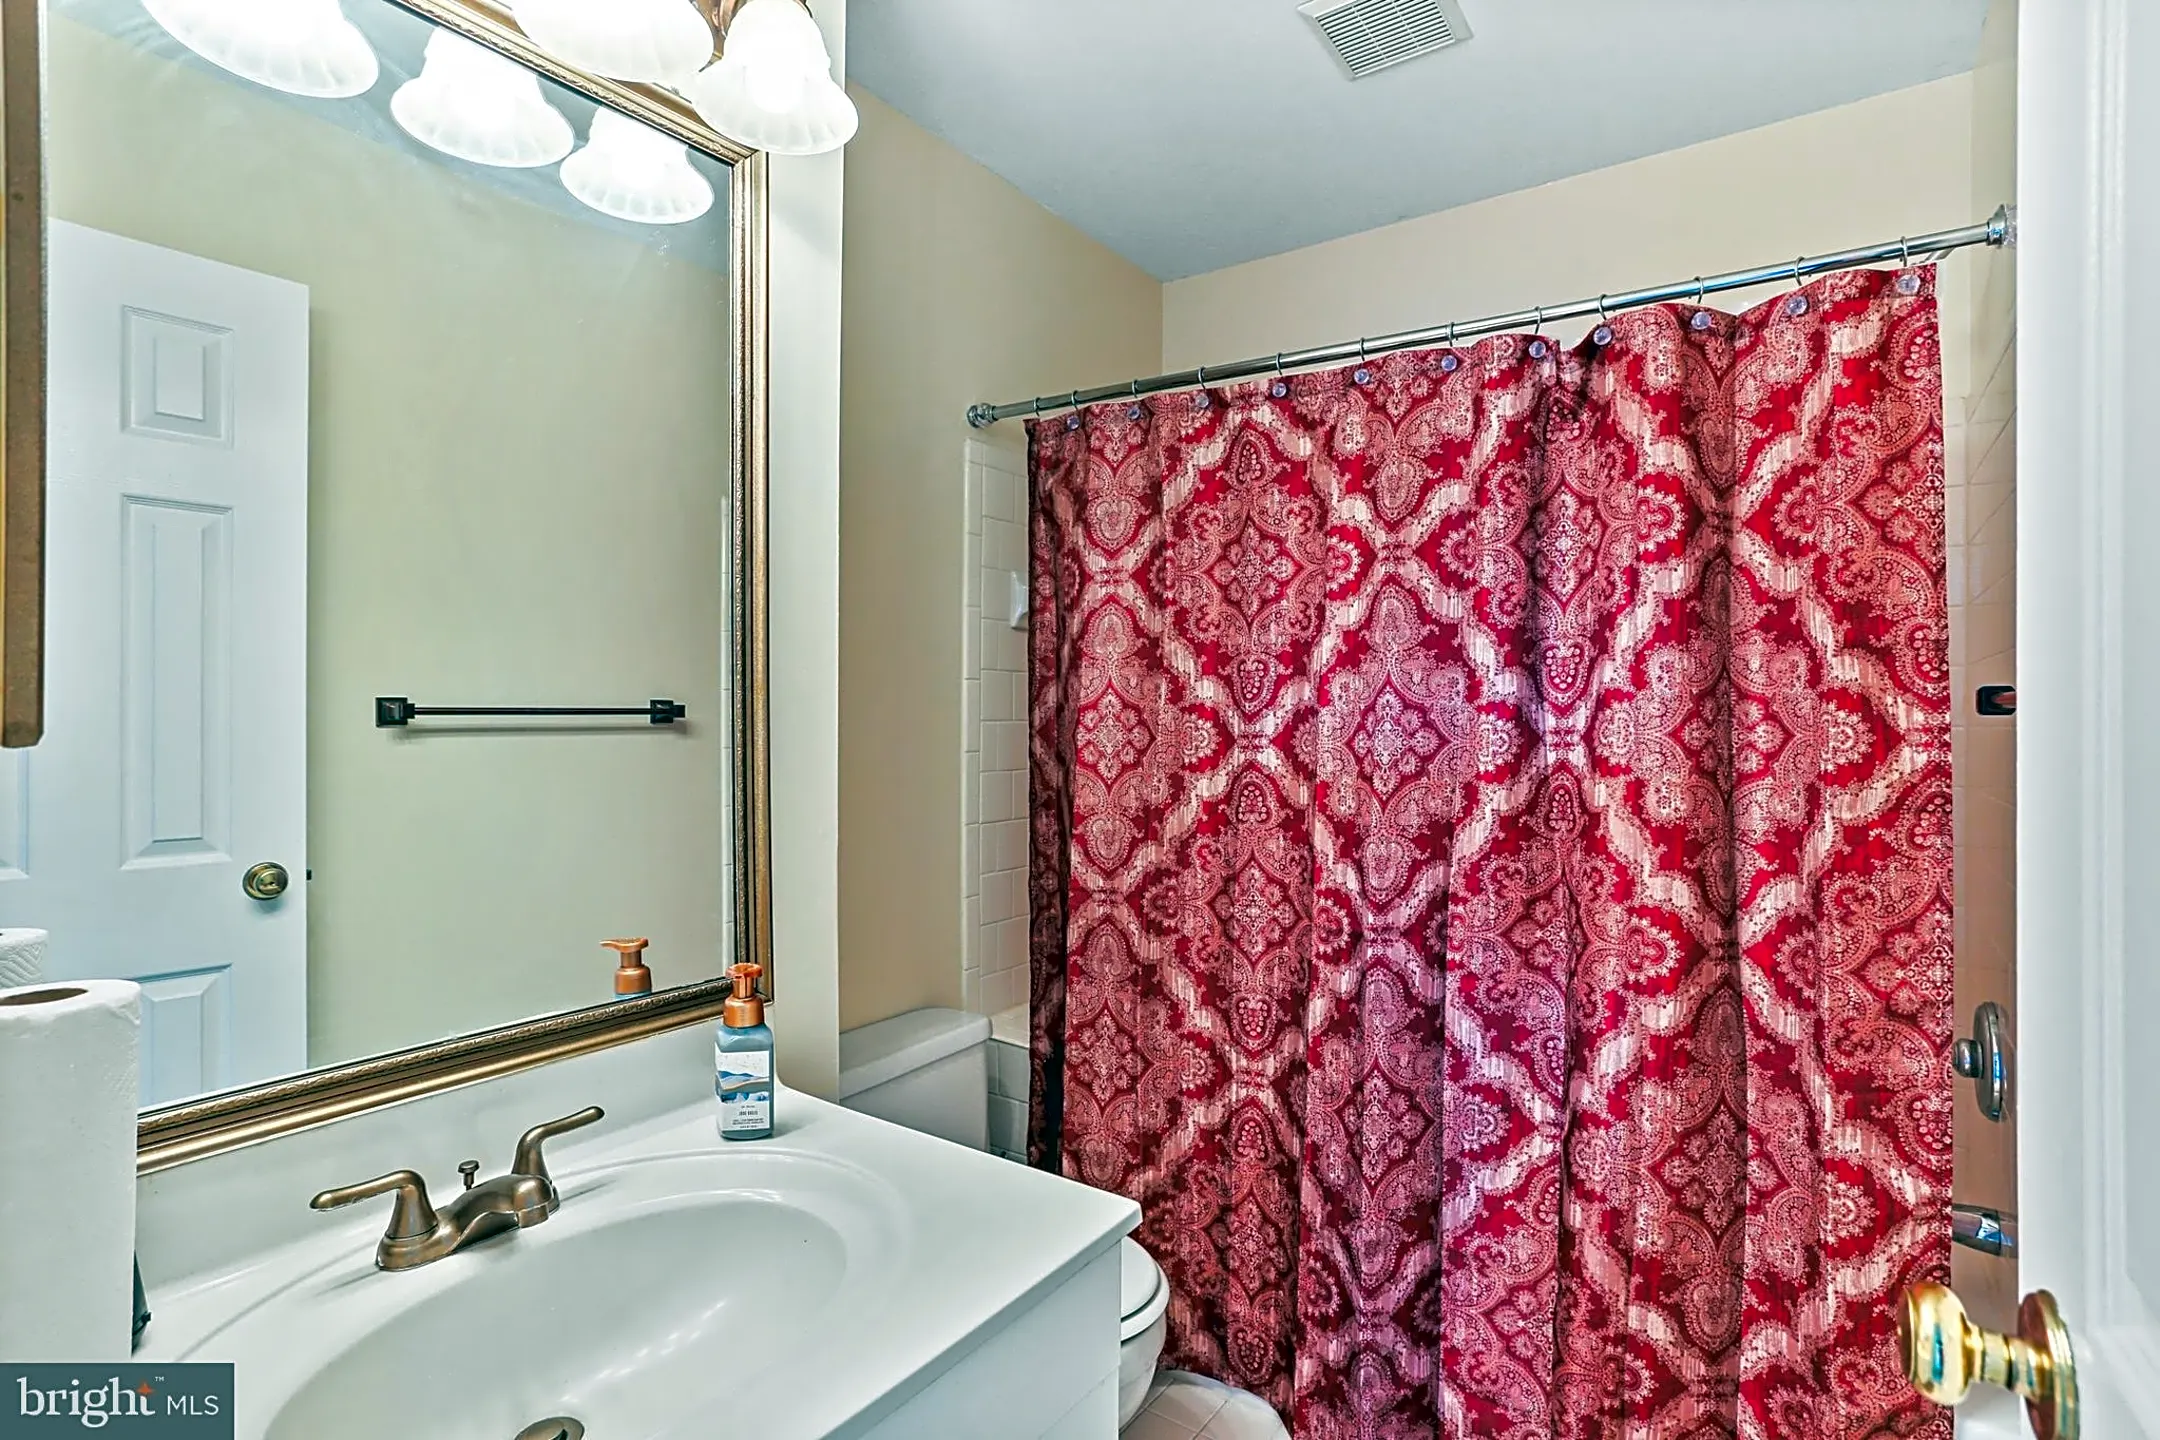 Bathroom - 7622 Stony Creek Ln - Ellicott City, MD